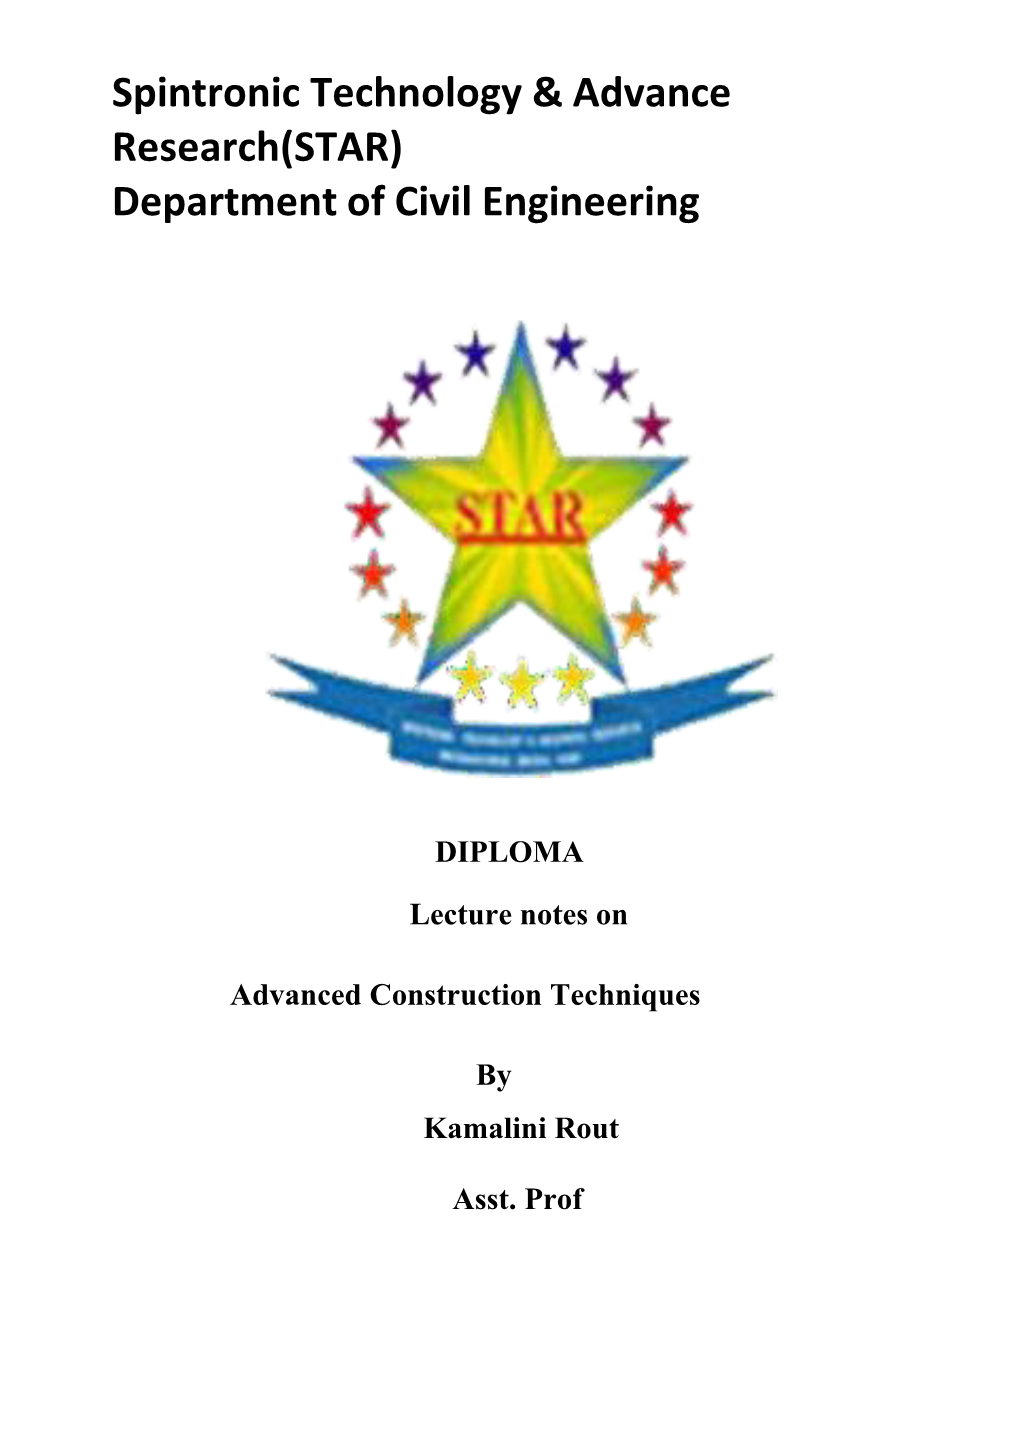 (STAR) Department of Civil Engineering